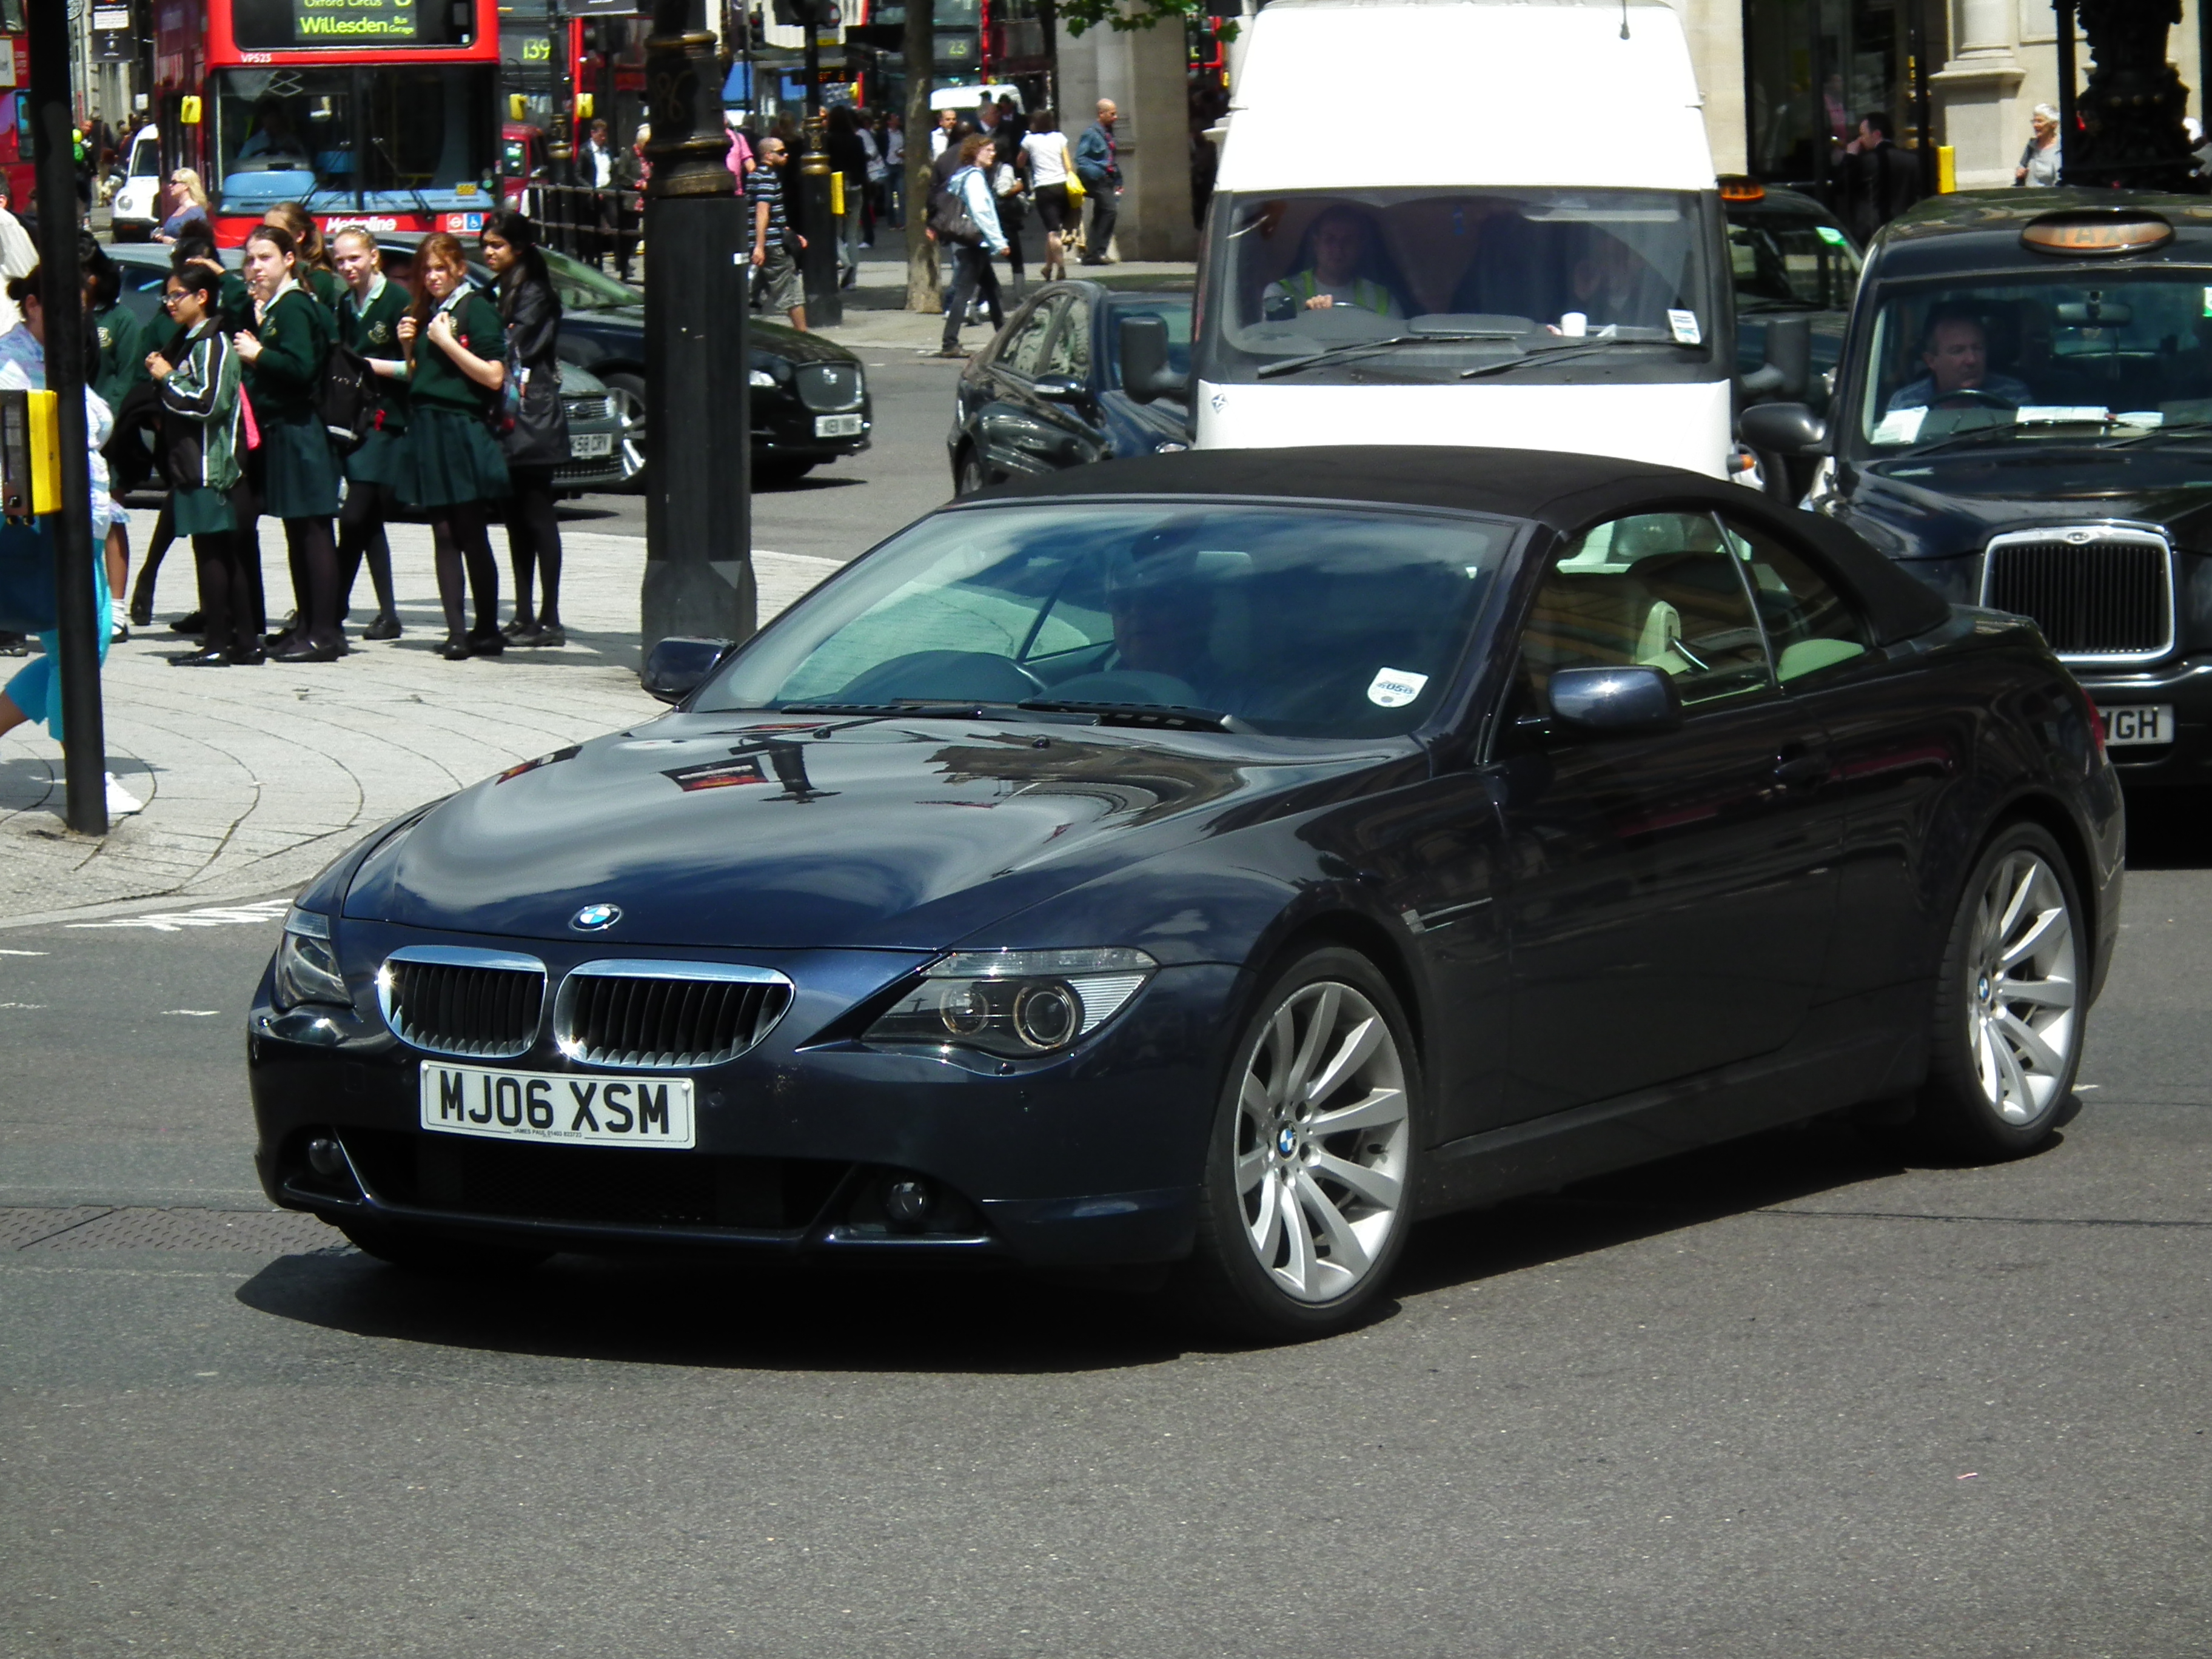 BMW 630i Sport | Flickr - Photo Sharing!